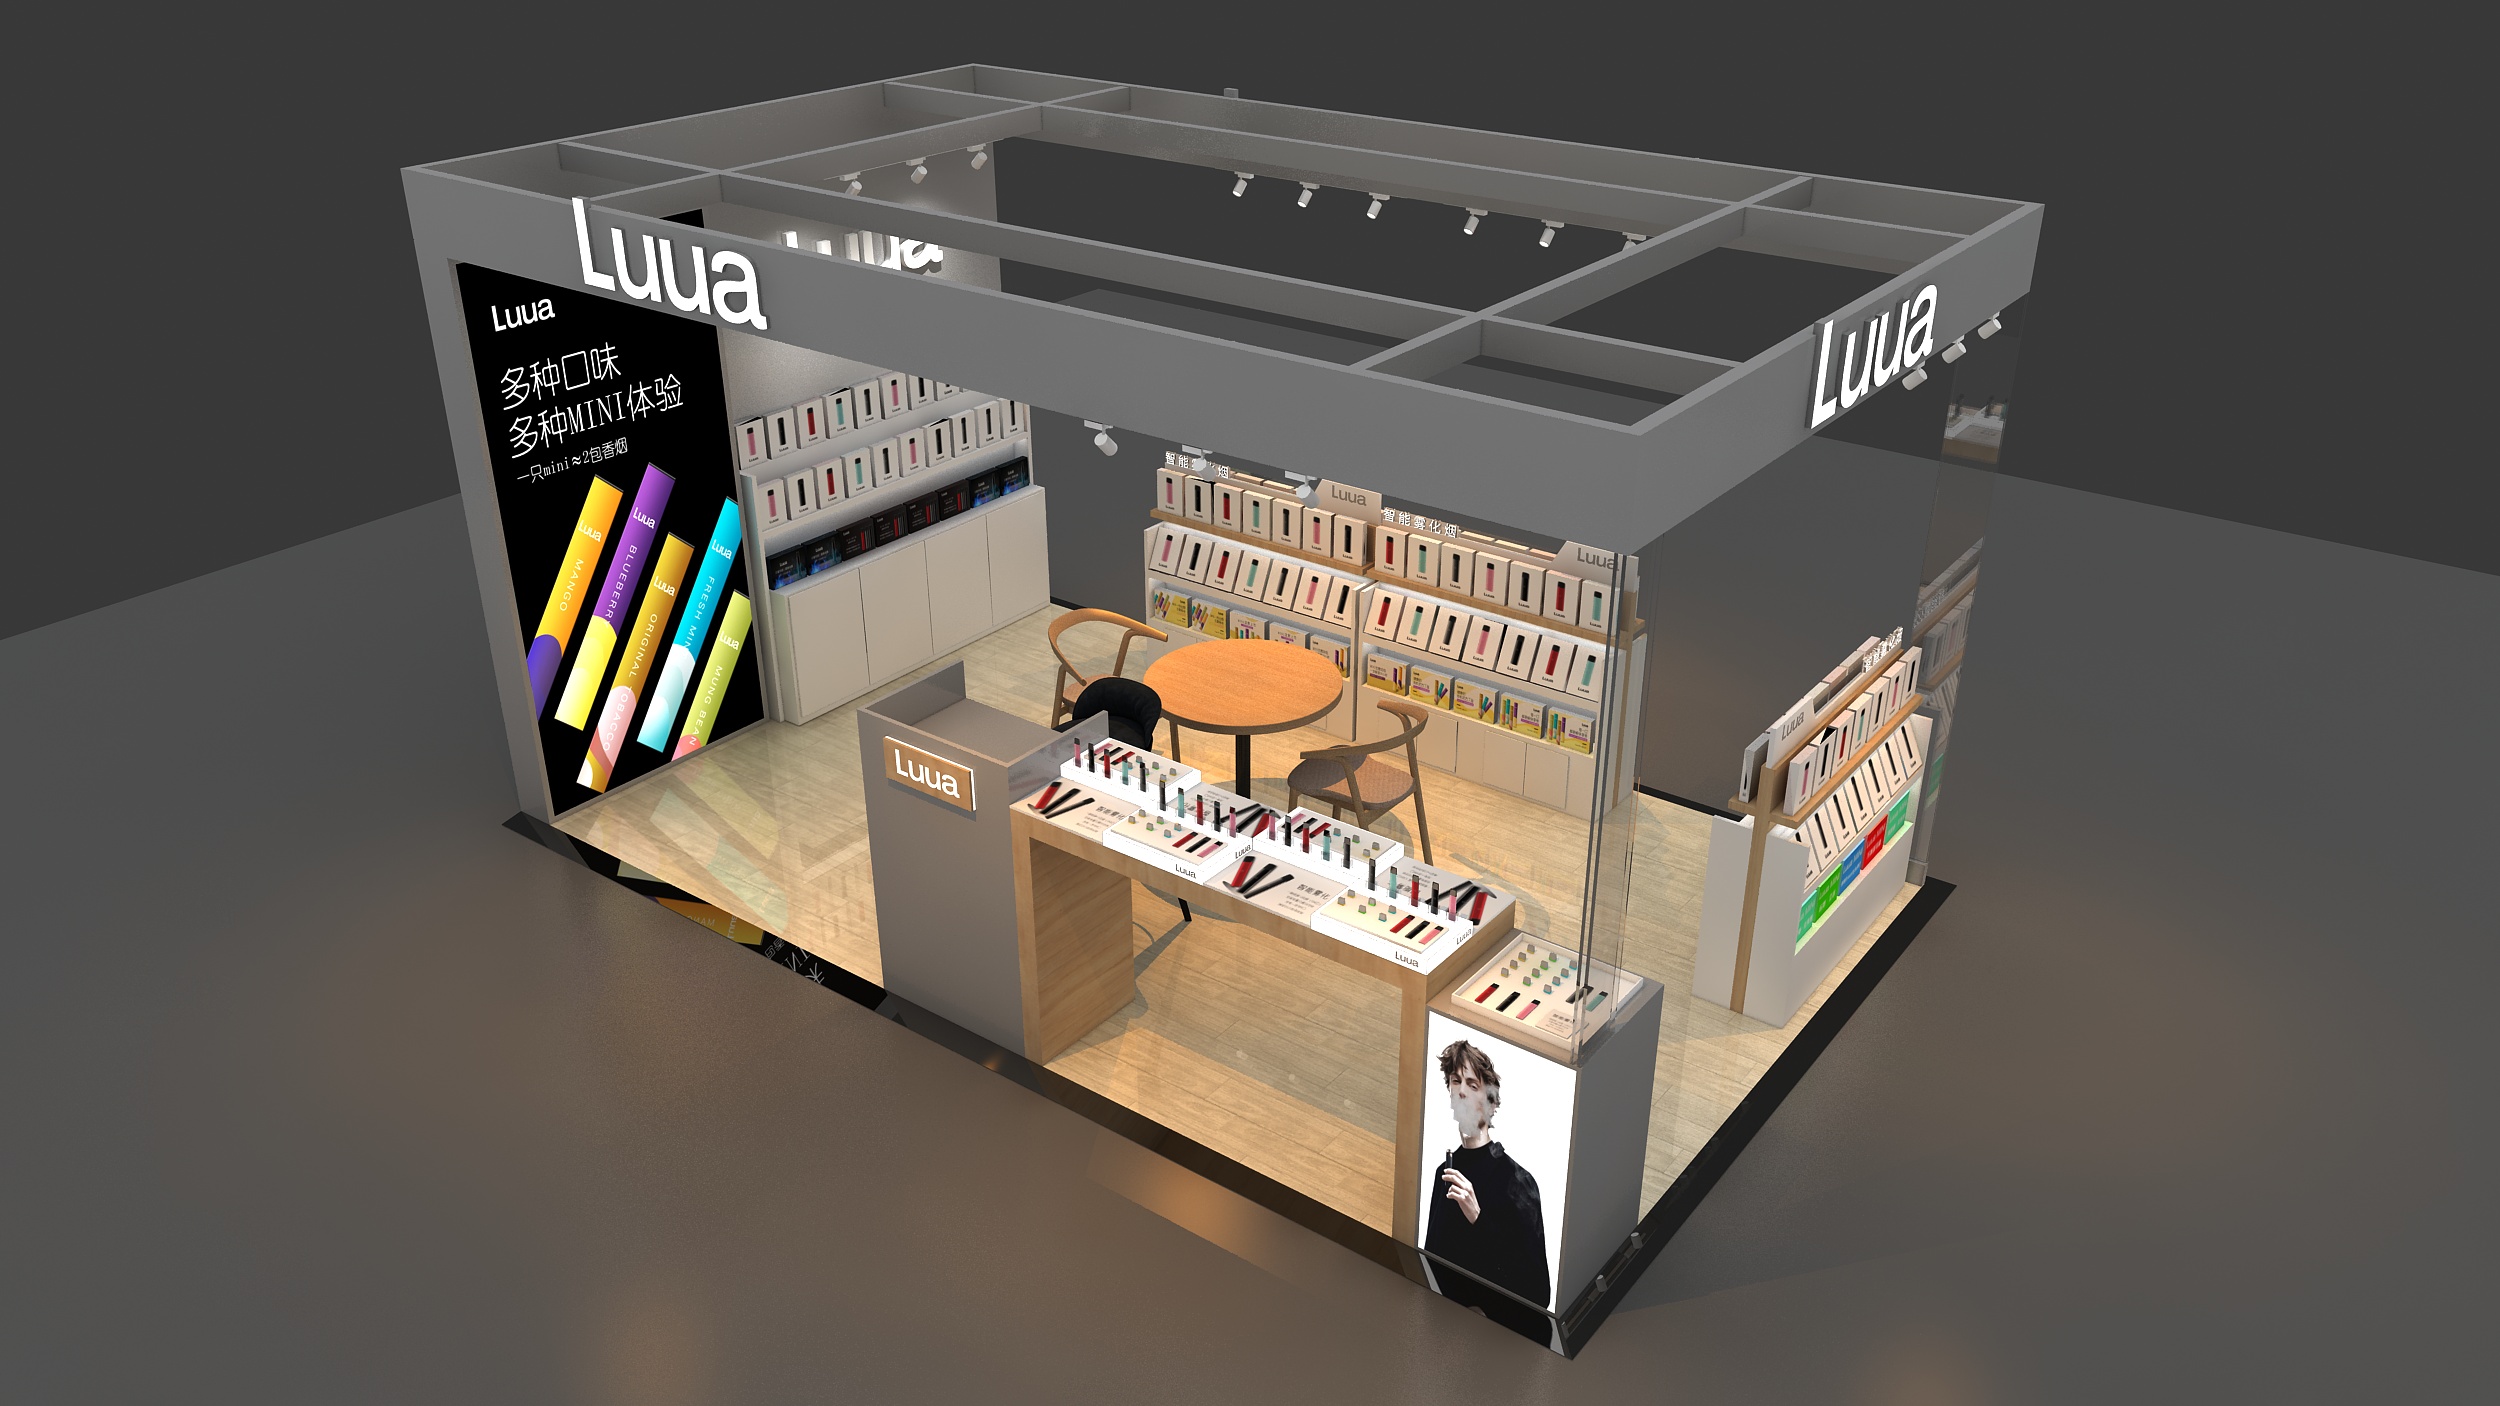 Luua Vape show exhibition booth design 3.jpg